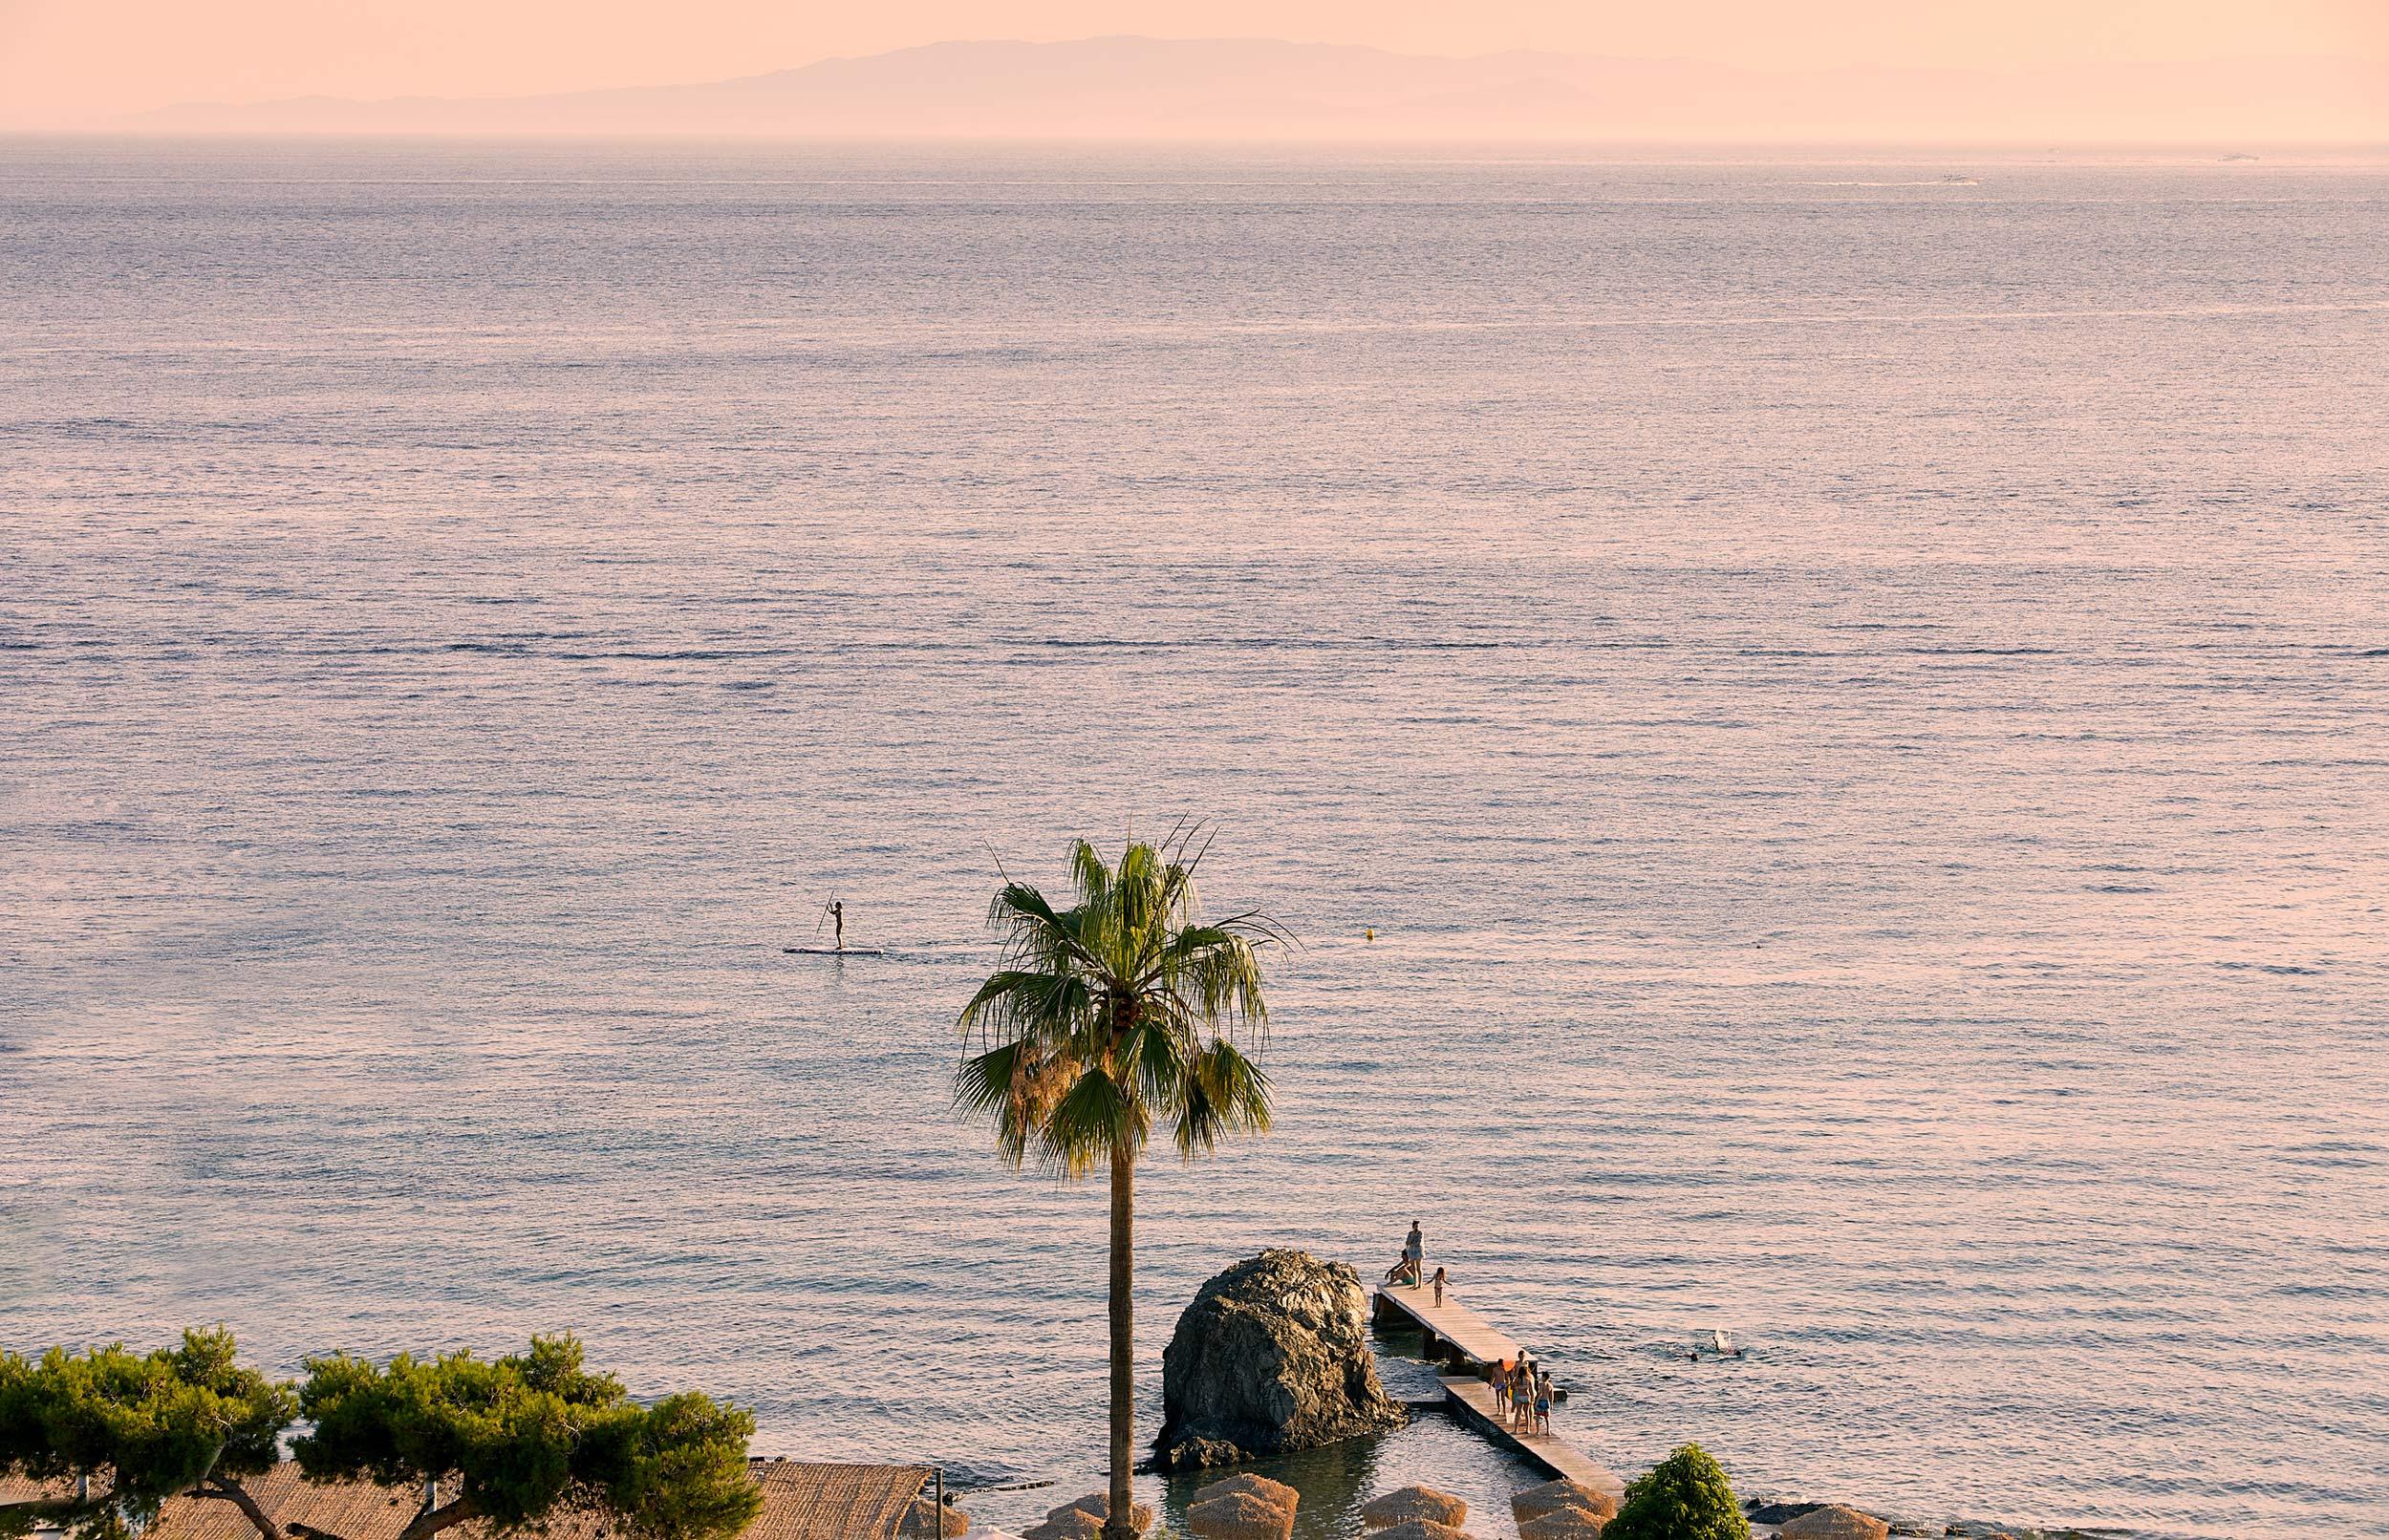 Evereden, Attica, Greece, sea,beach,  aerial view afternoon, palm tree, children playing